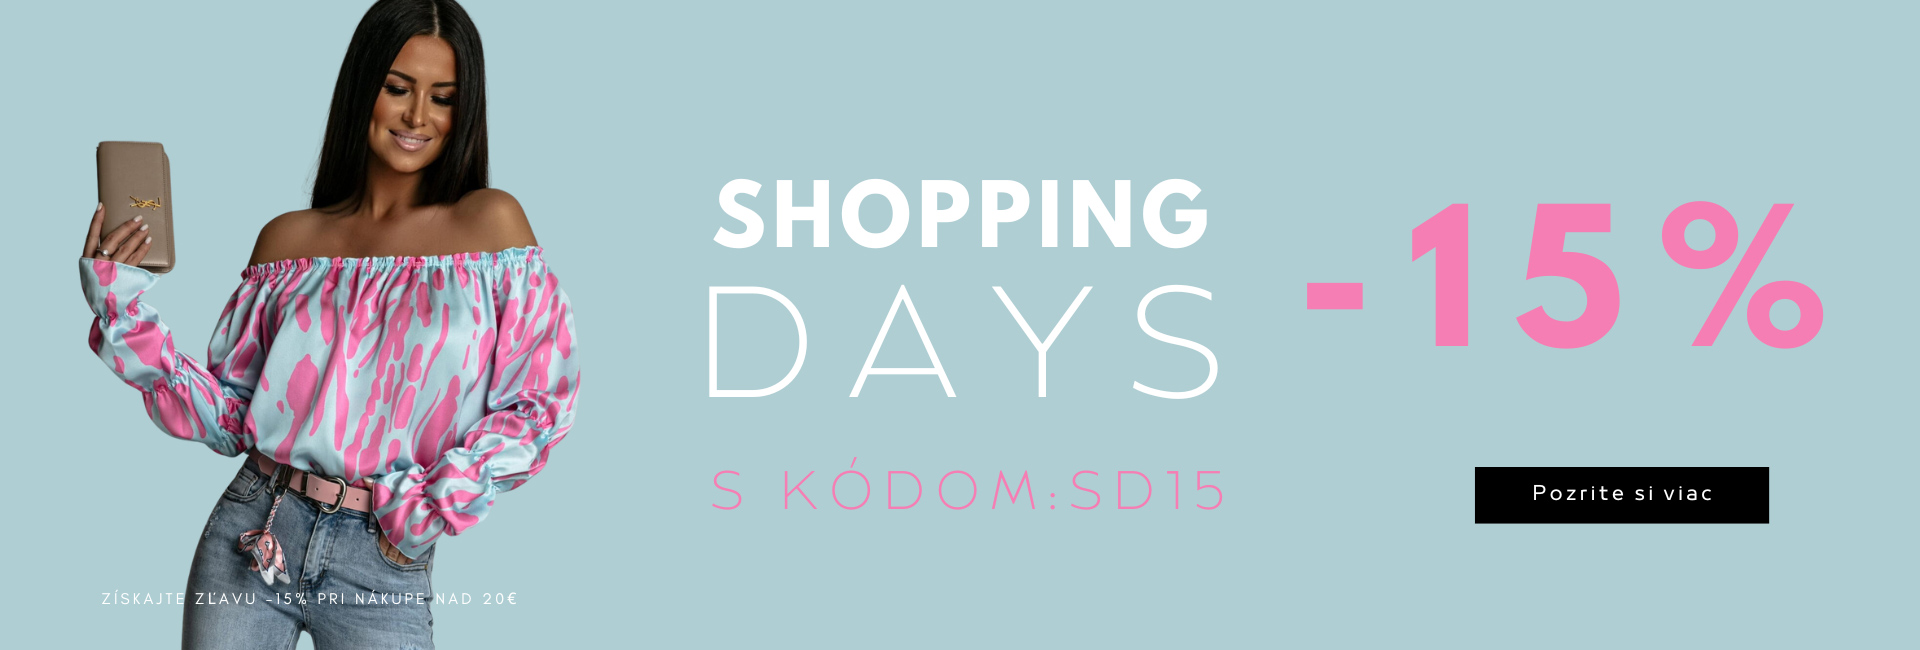 Shopping Days -15% s kódom: SD15